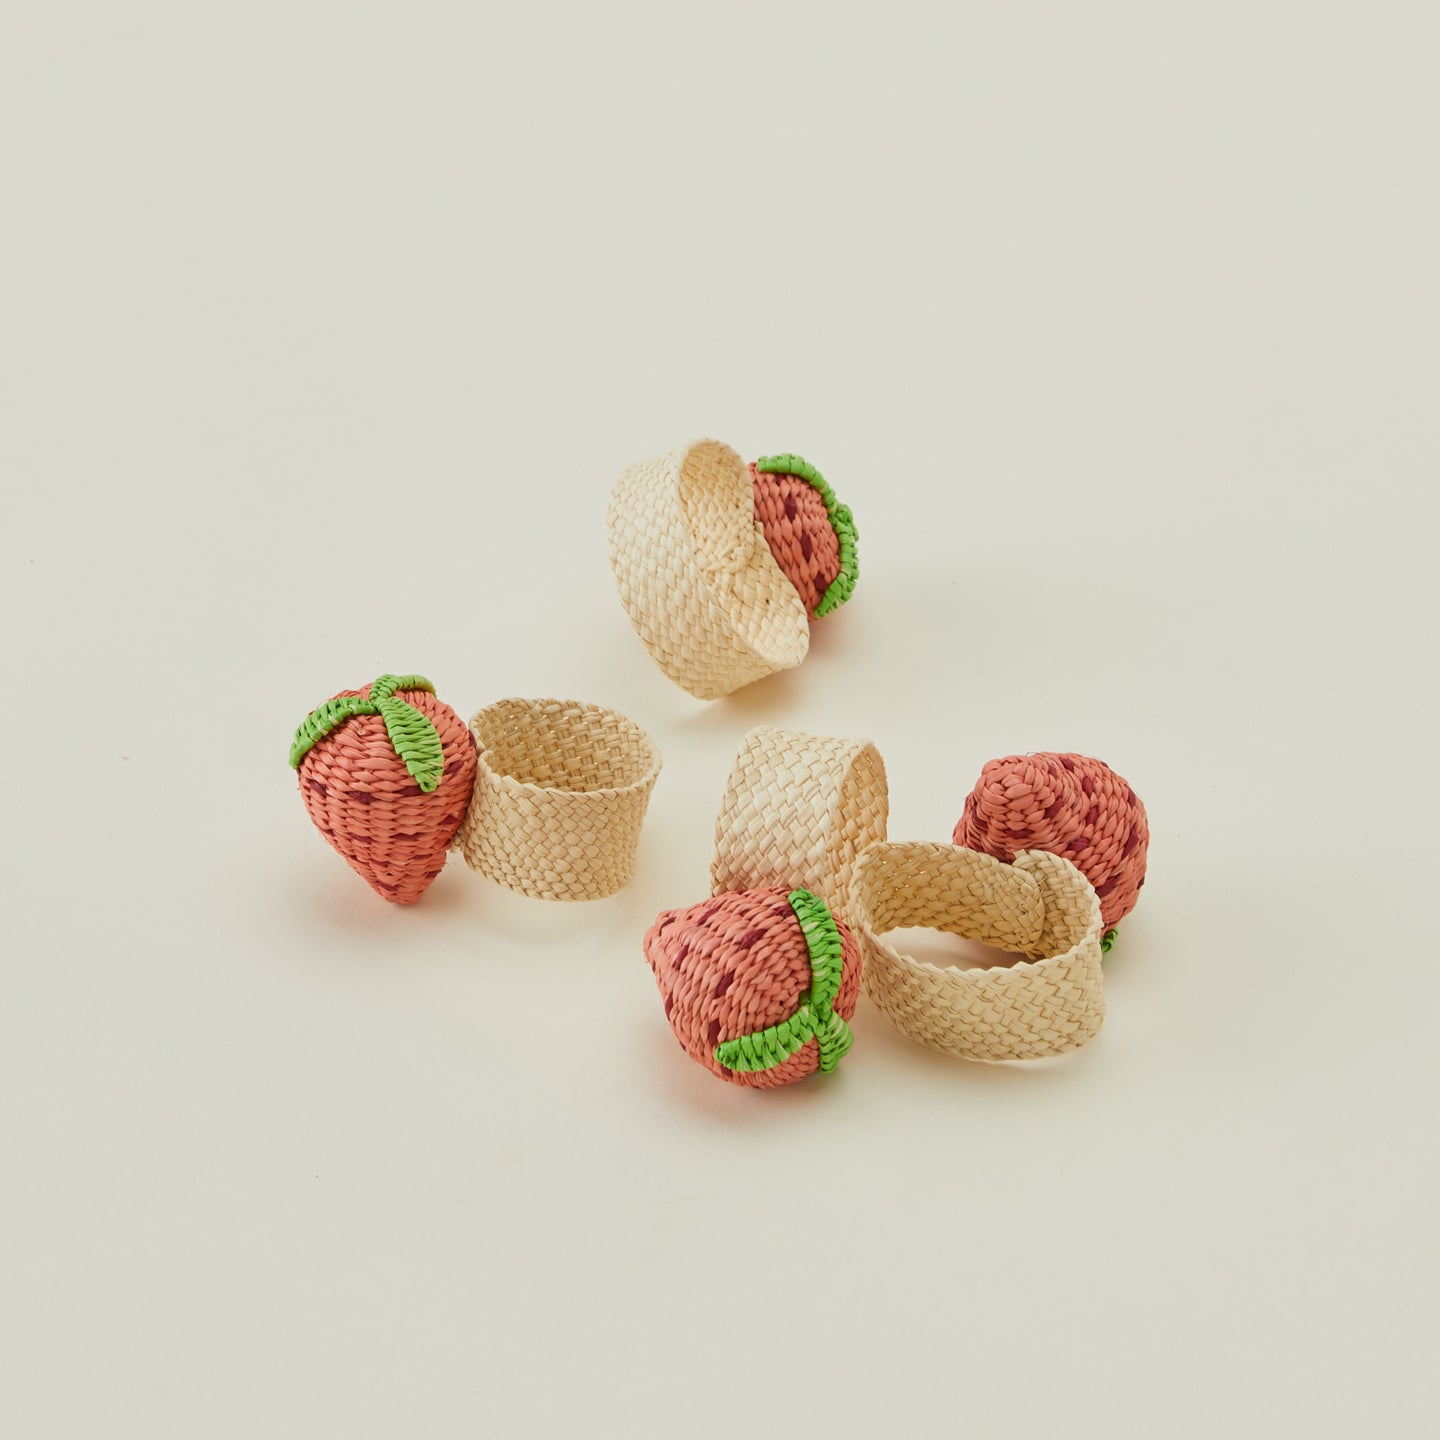 Woven Fruit Napkin Ring, Set of 4 - Strawberry